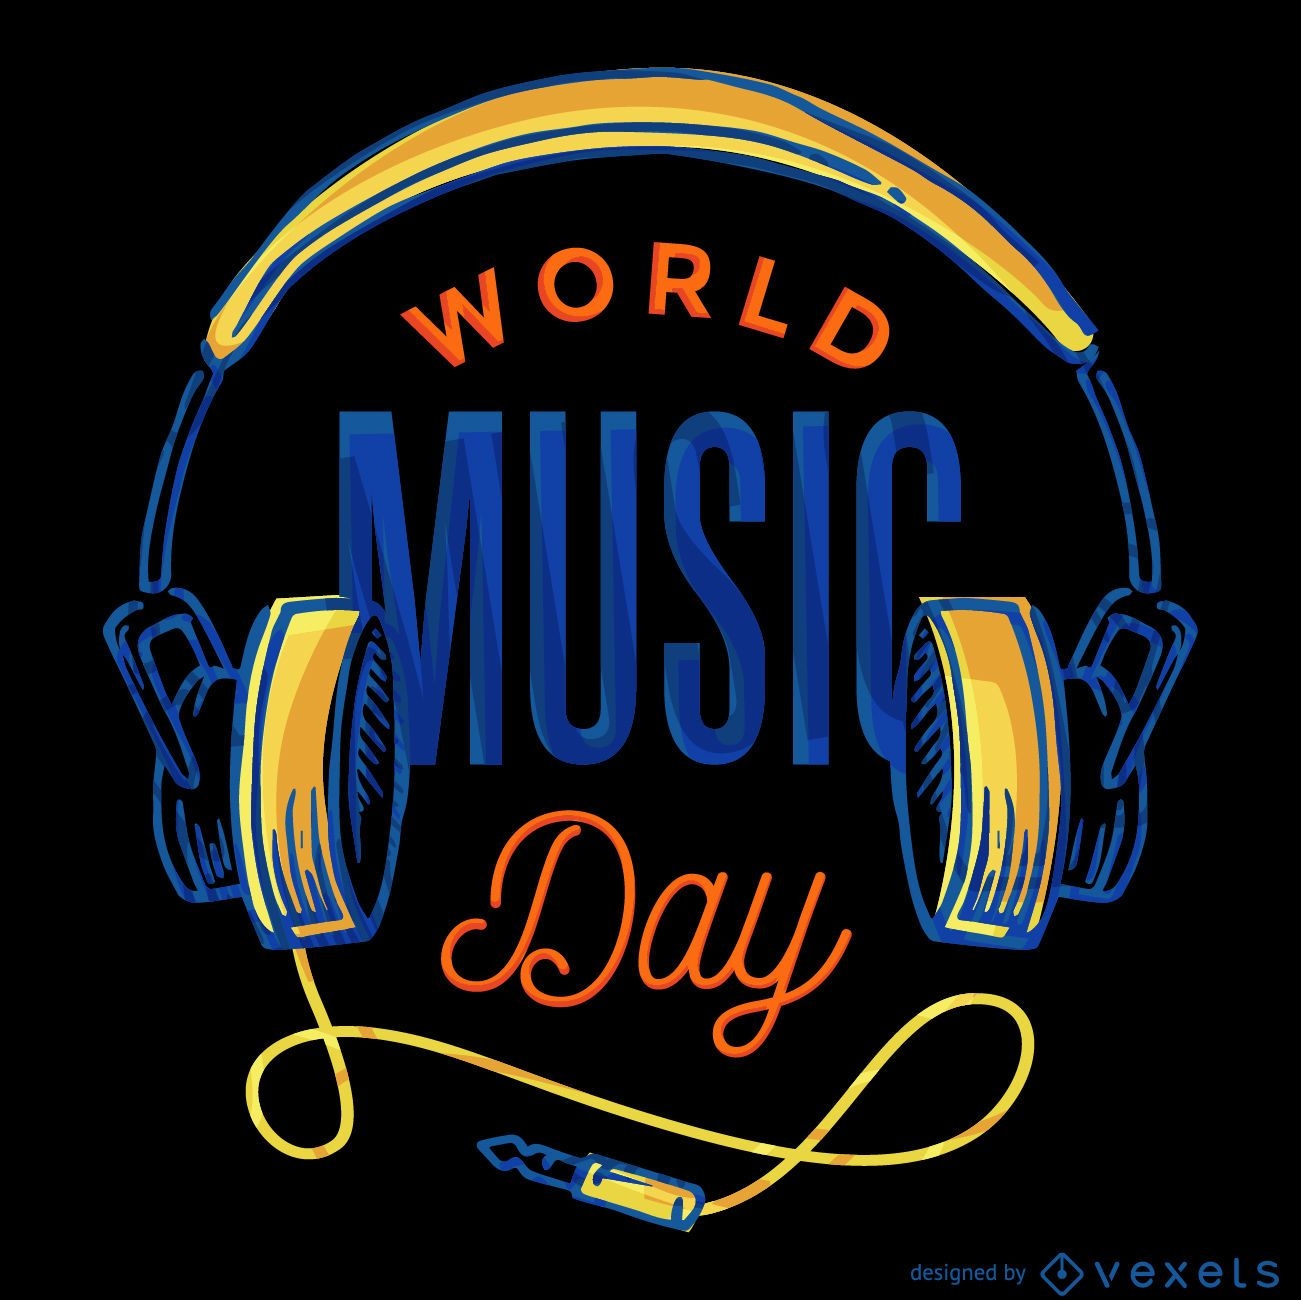 Designs Gráficos para Camisetas e Merch de dia mundial da musica